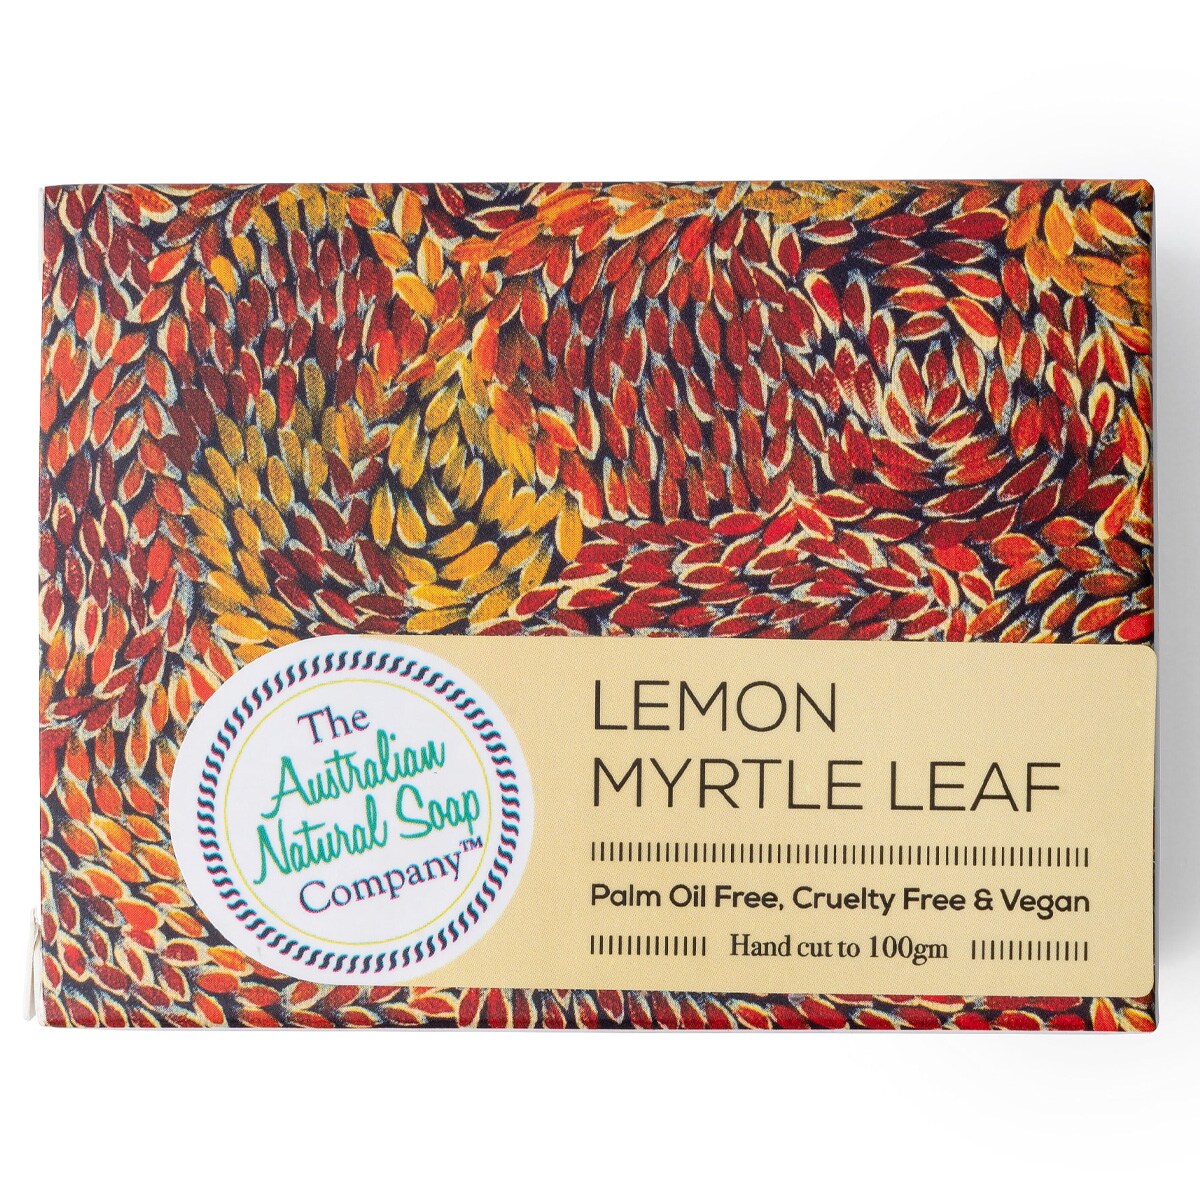 The Australian Natural Soap Company Lemon Myrtle Leaf 100g